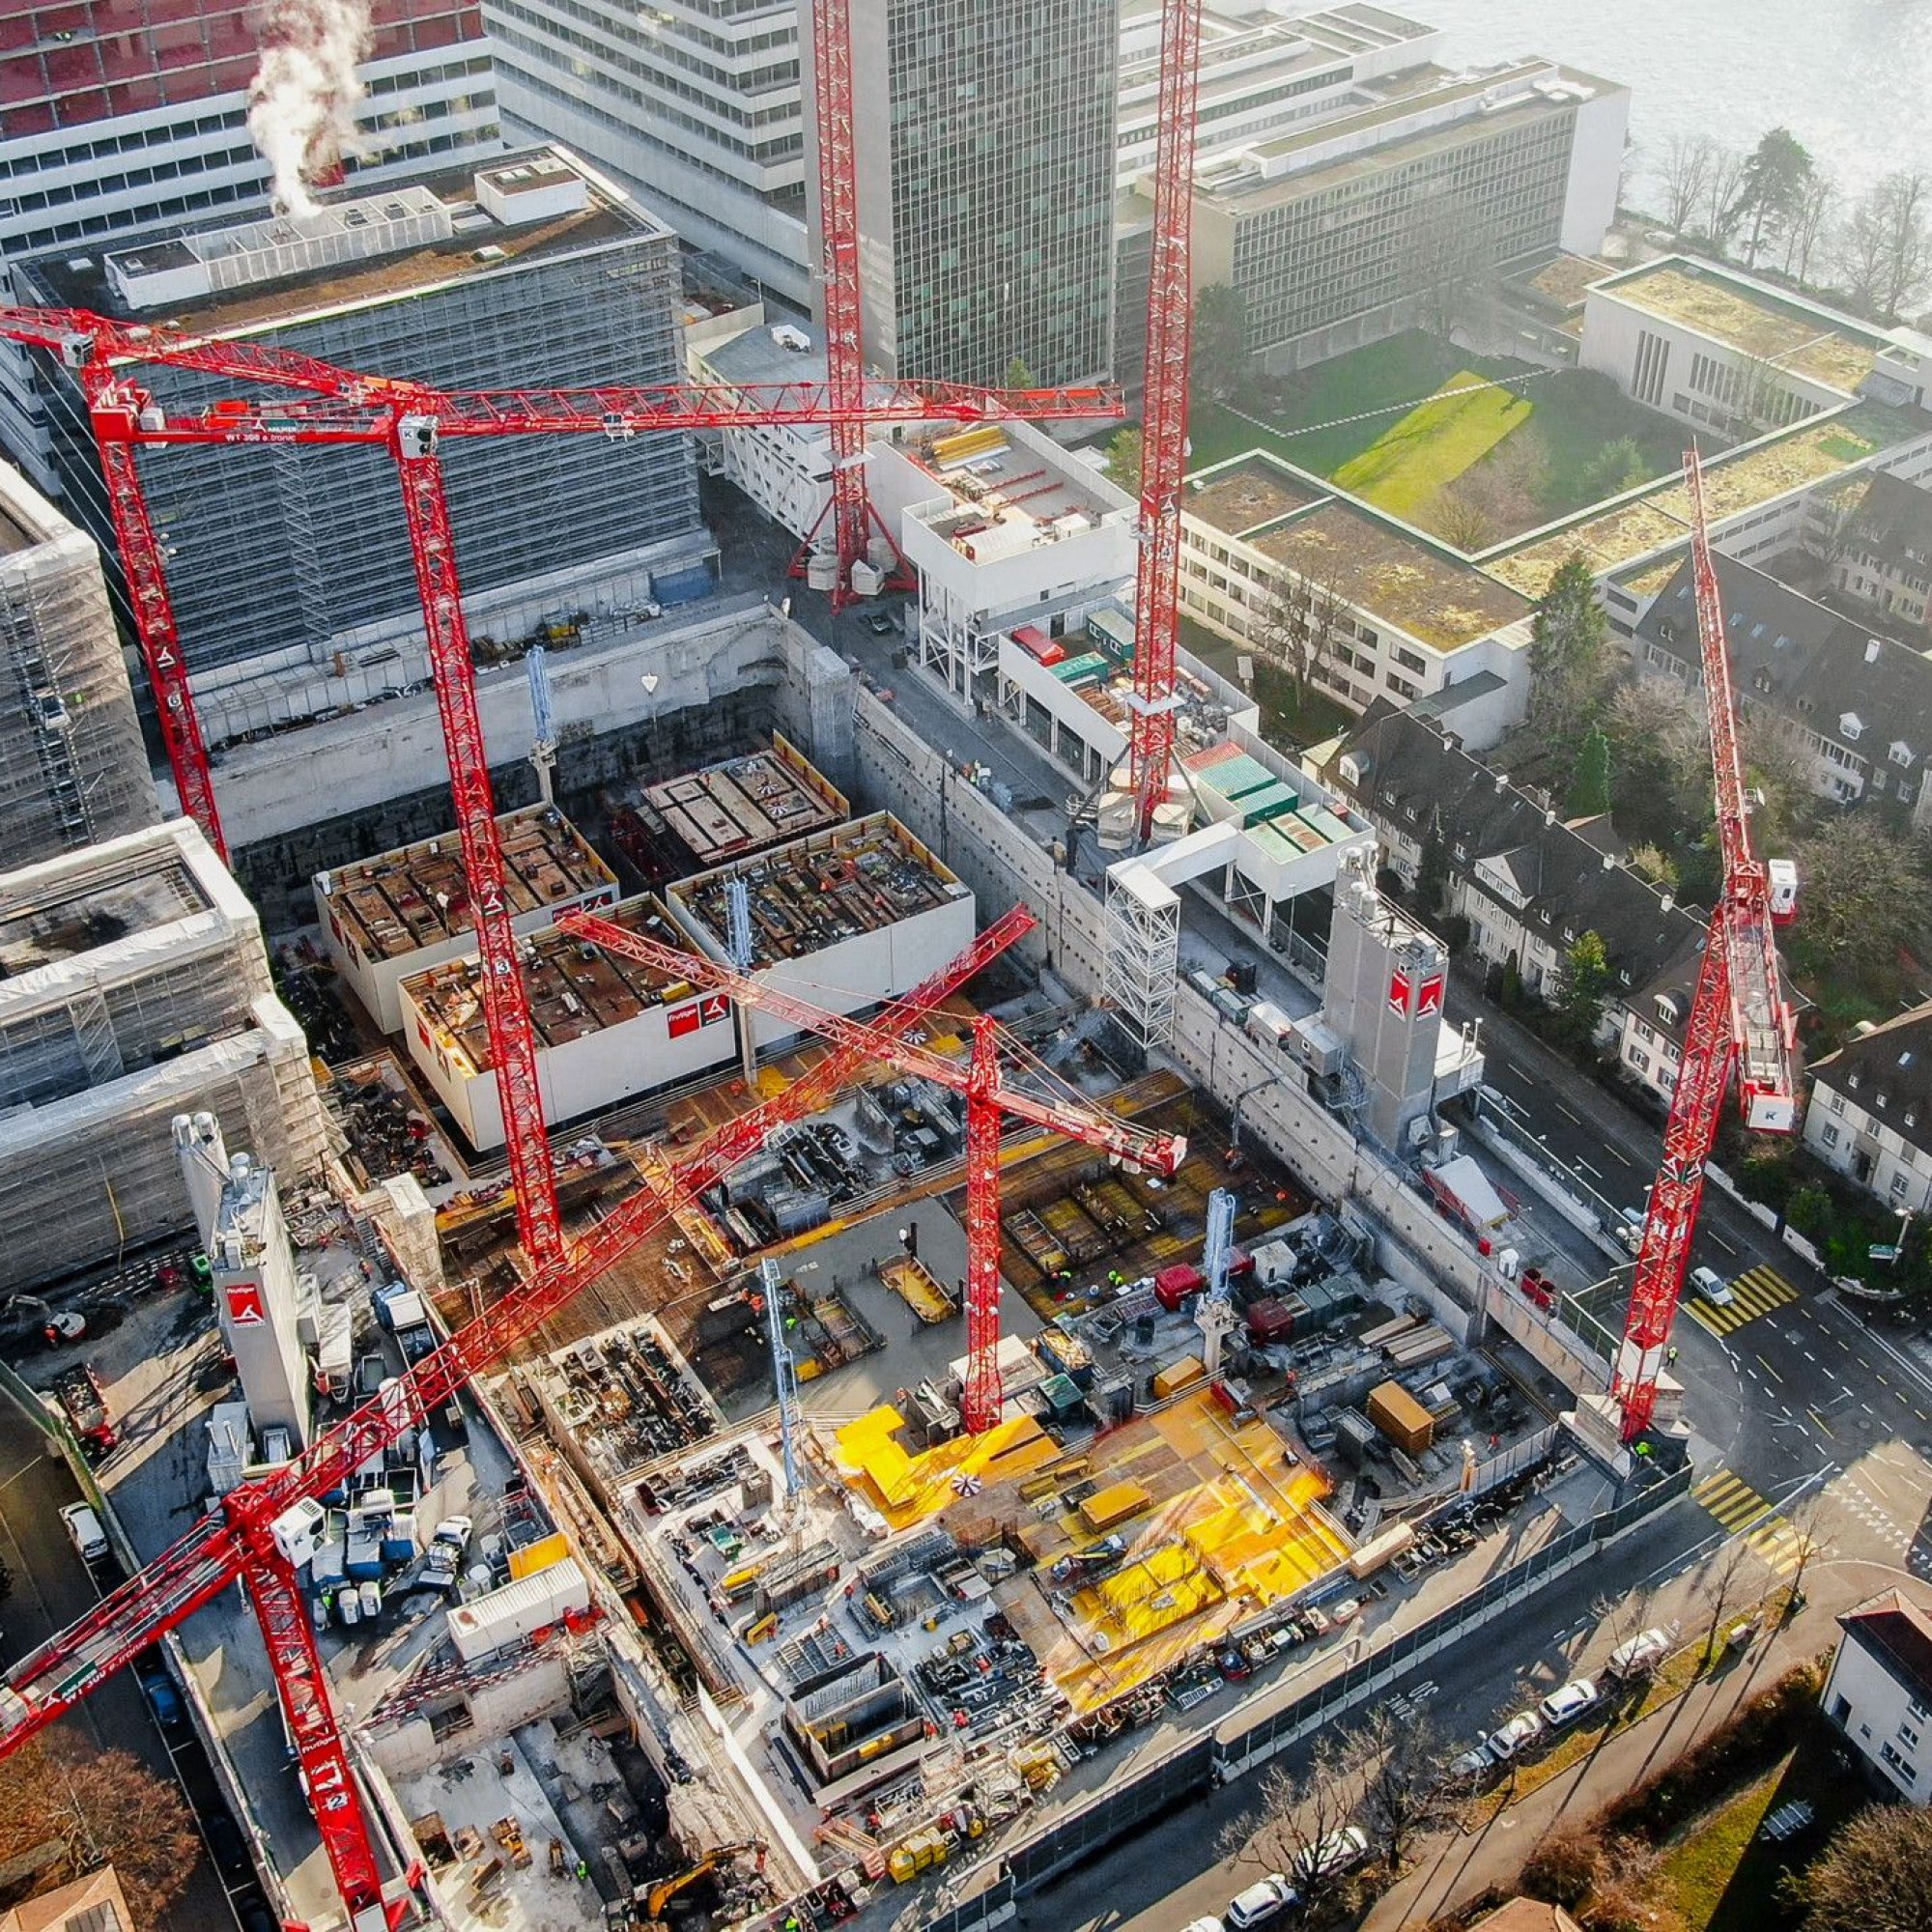 Baugrube des neuen Roche-Forschungszentrums «pRED Innovation Center» in Basel